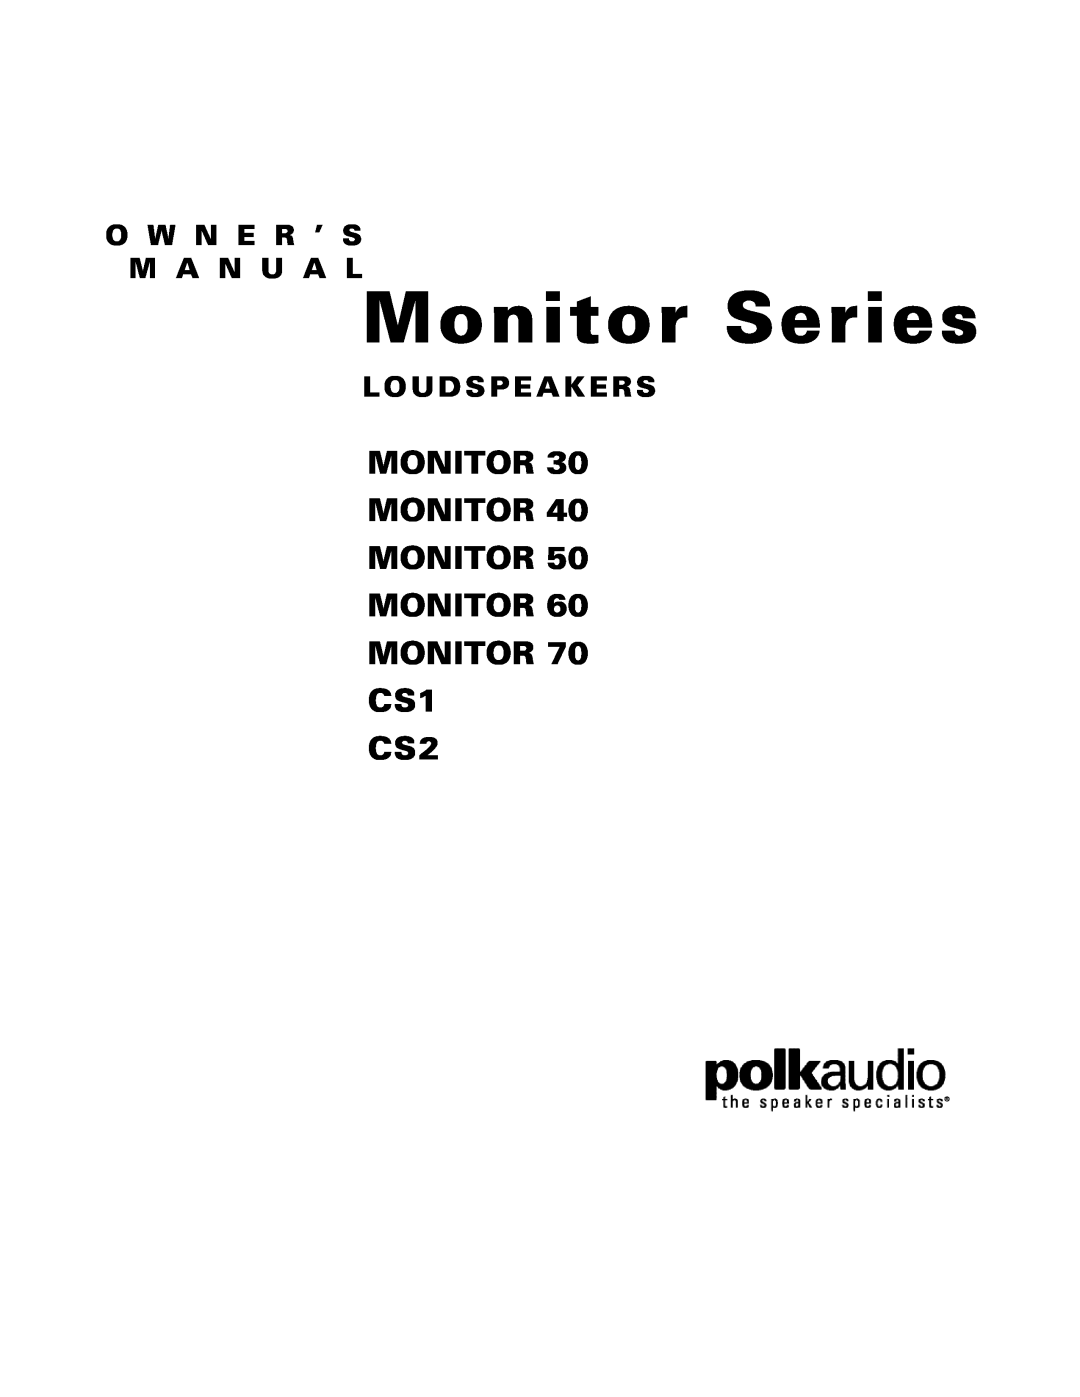 Polk Audio AM6095-B owner manual Monitor Series, MONITOR MONITOR MONITOR MONITOR MONITOR CS1 CS2, Loudspeakers 